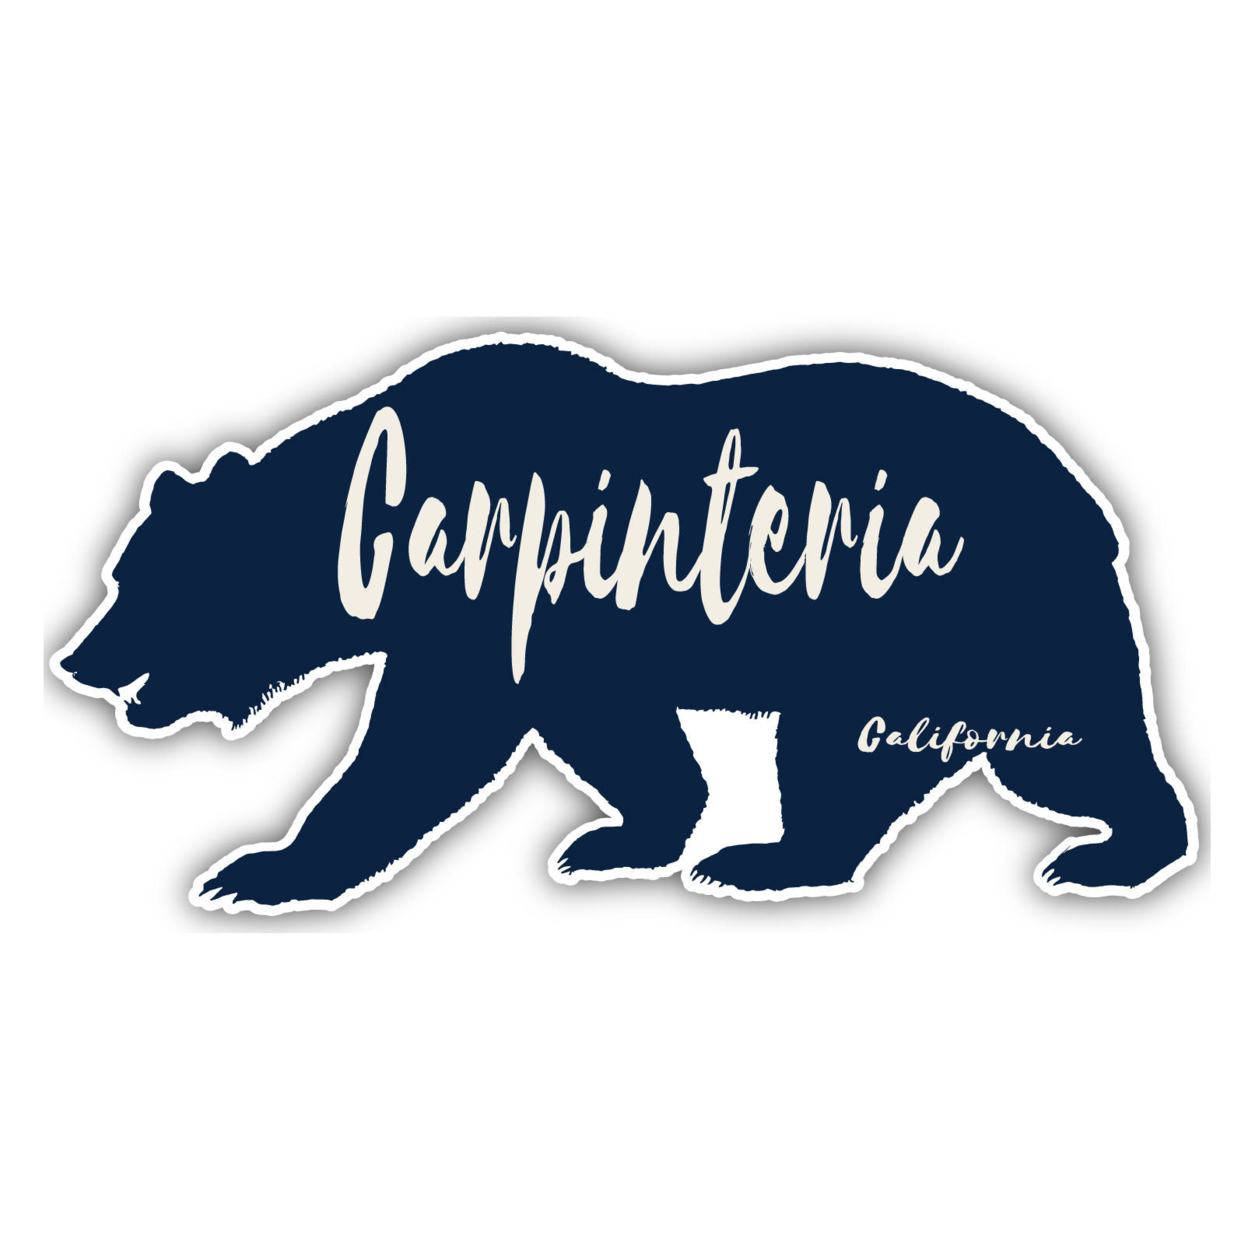 Carpinteria California Souvenir Decorative Stickers (Choose Theme And Size) - 4-Pack, 12-Inch, Tent